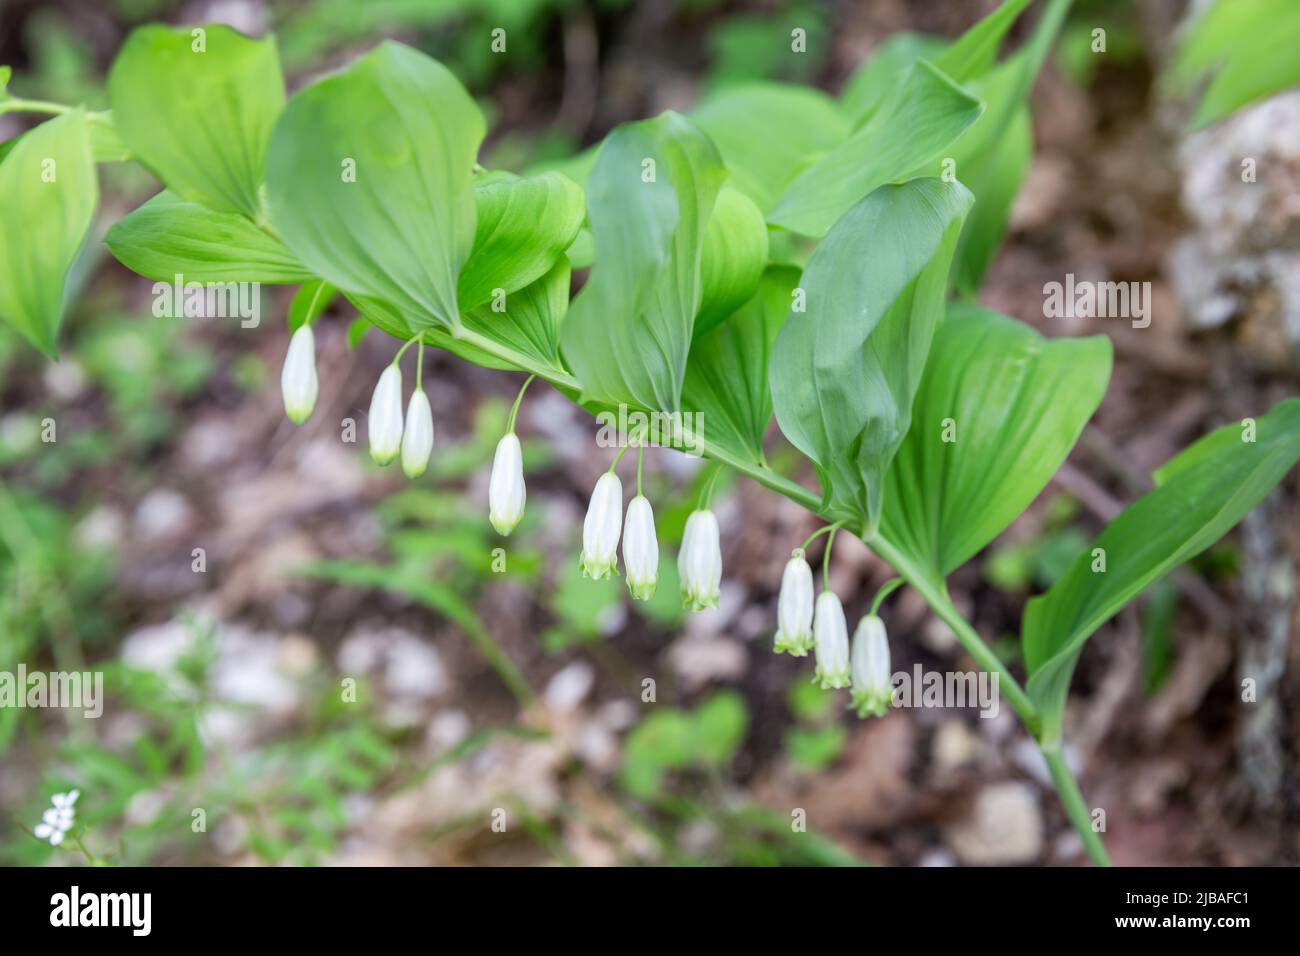 Planta medicinal silvestre Polygonatum odoratum o sello de Salomón Foto de stock